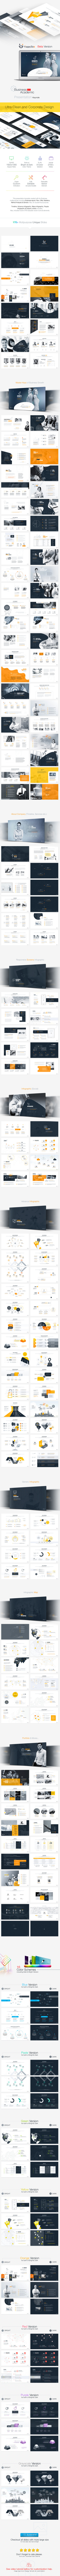 Graphicriver corporate clean business keynote presentation templates multipurpose design ip 590px